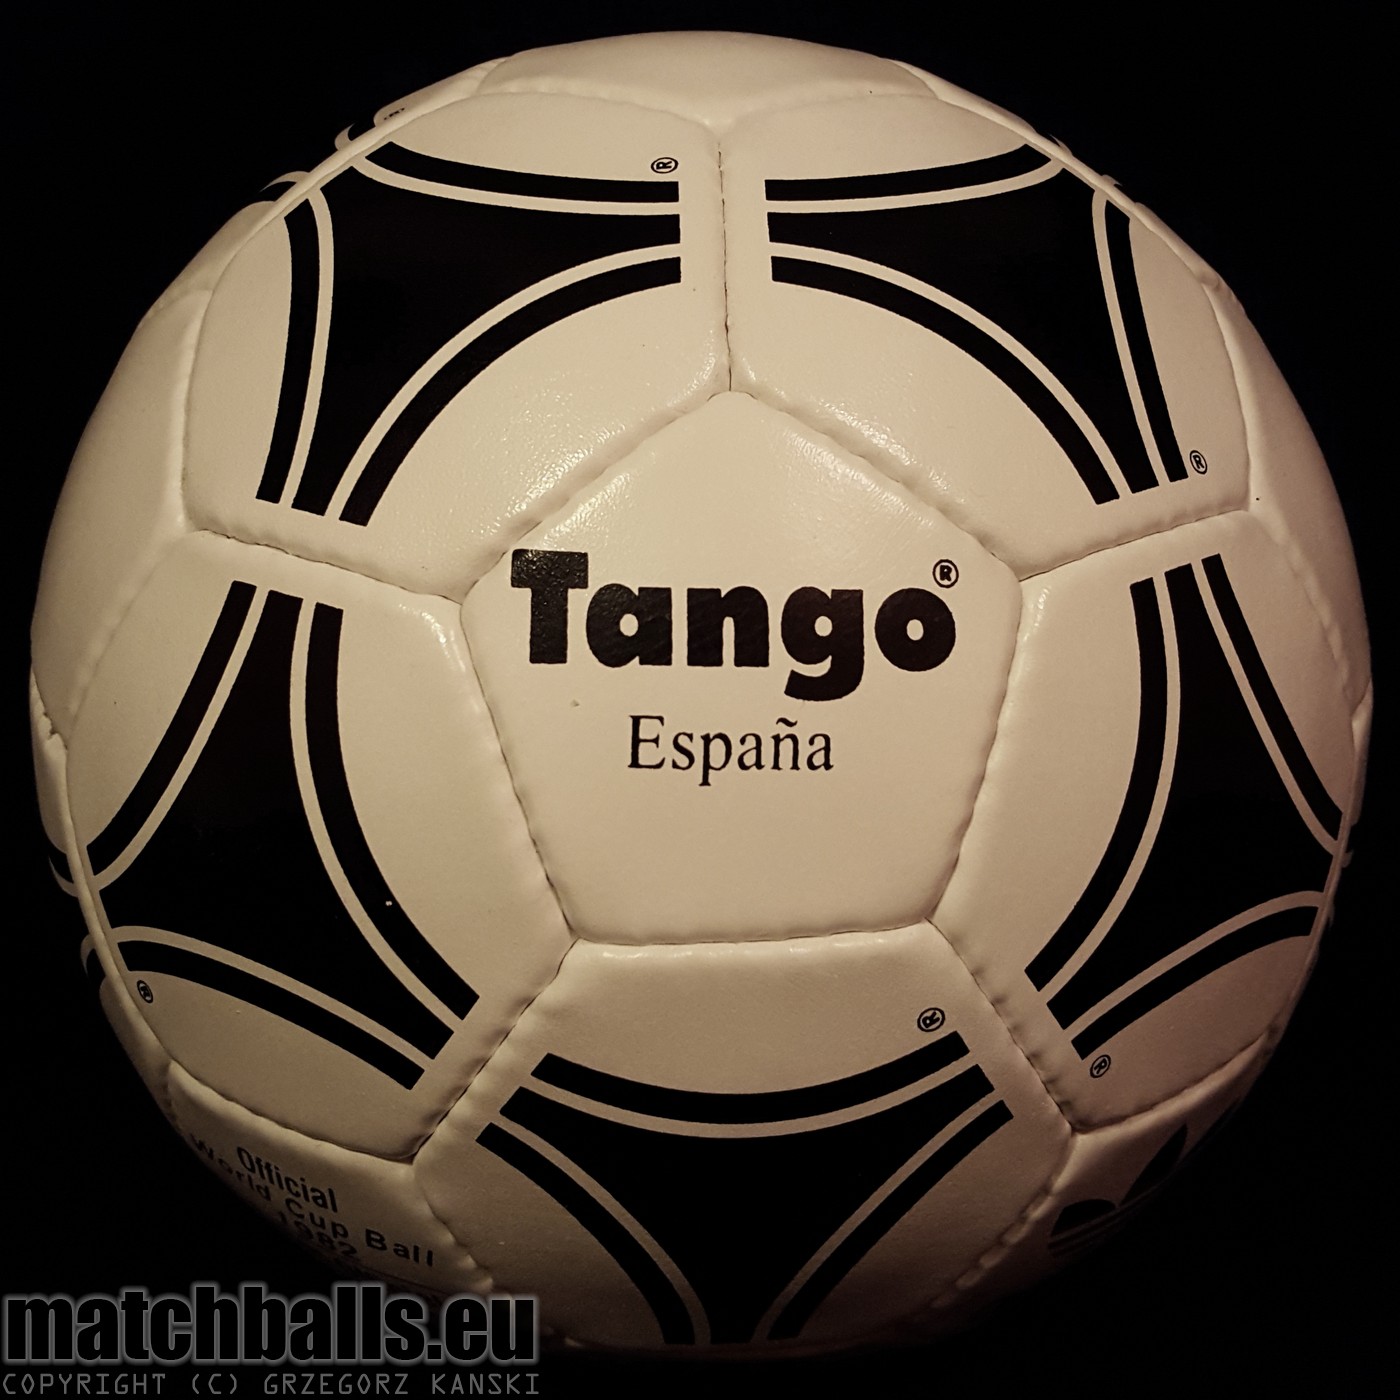 Adidas Tango EspaÃ±a Regular (Re-issue) | matchballs.eu